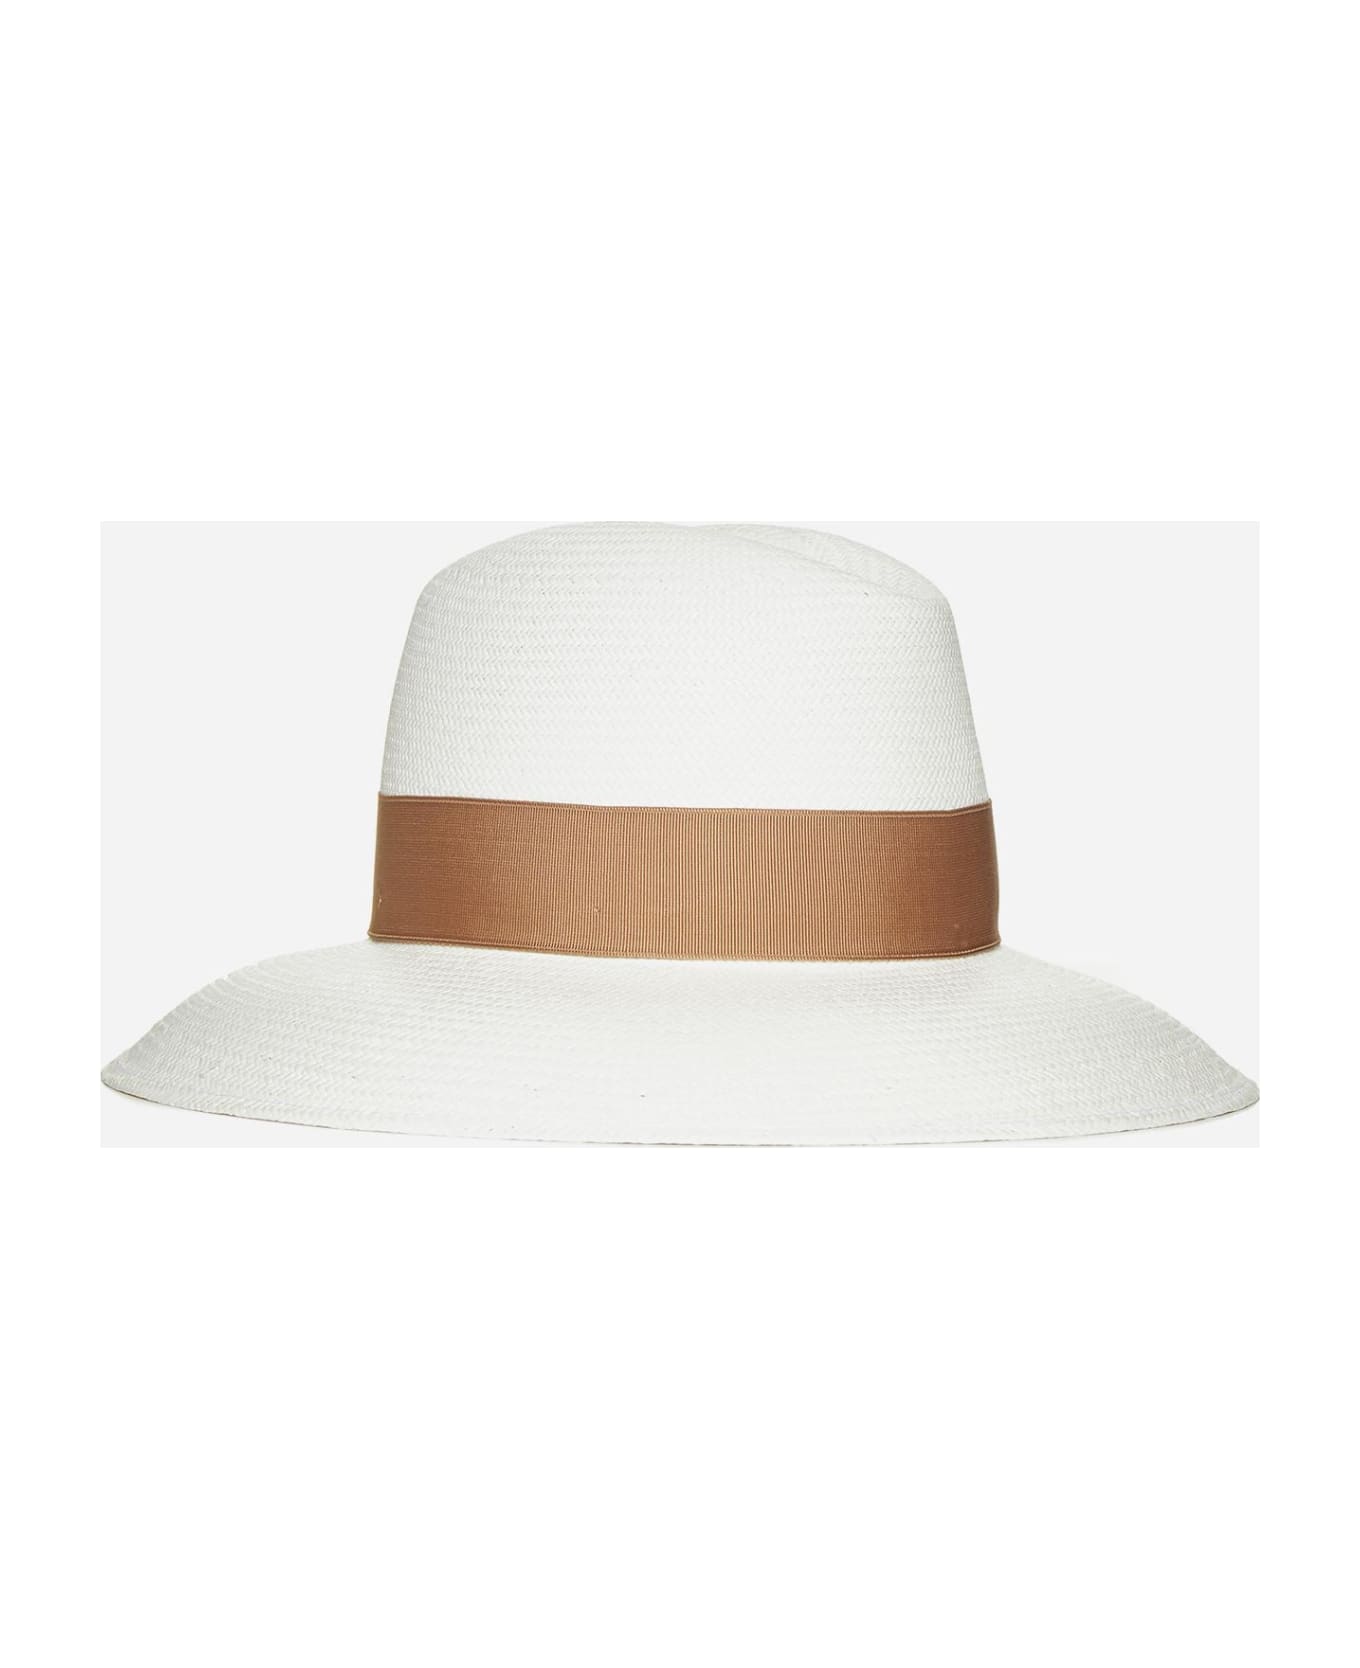 Borsalino Caludette Large Brim Panama Hat - Beige 帽子